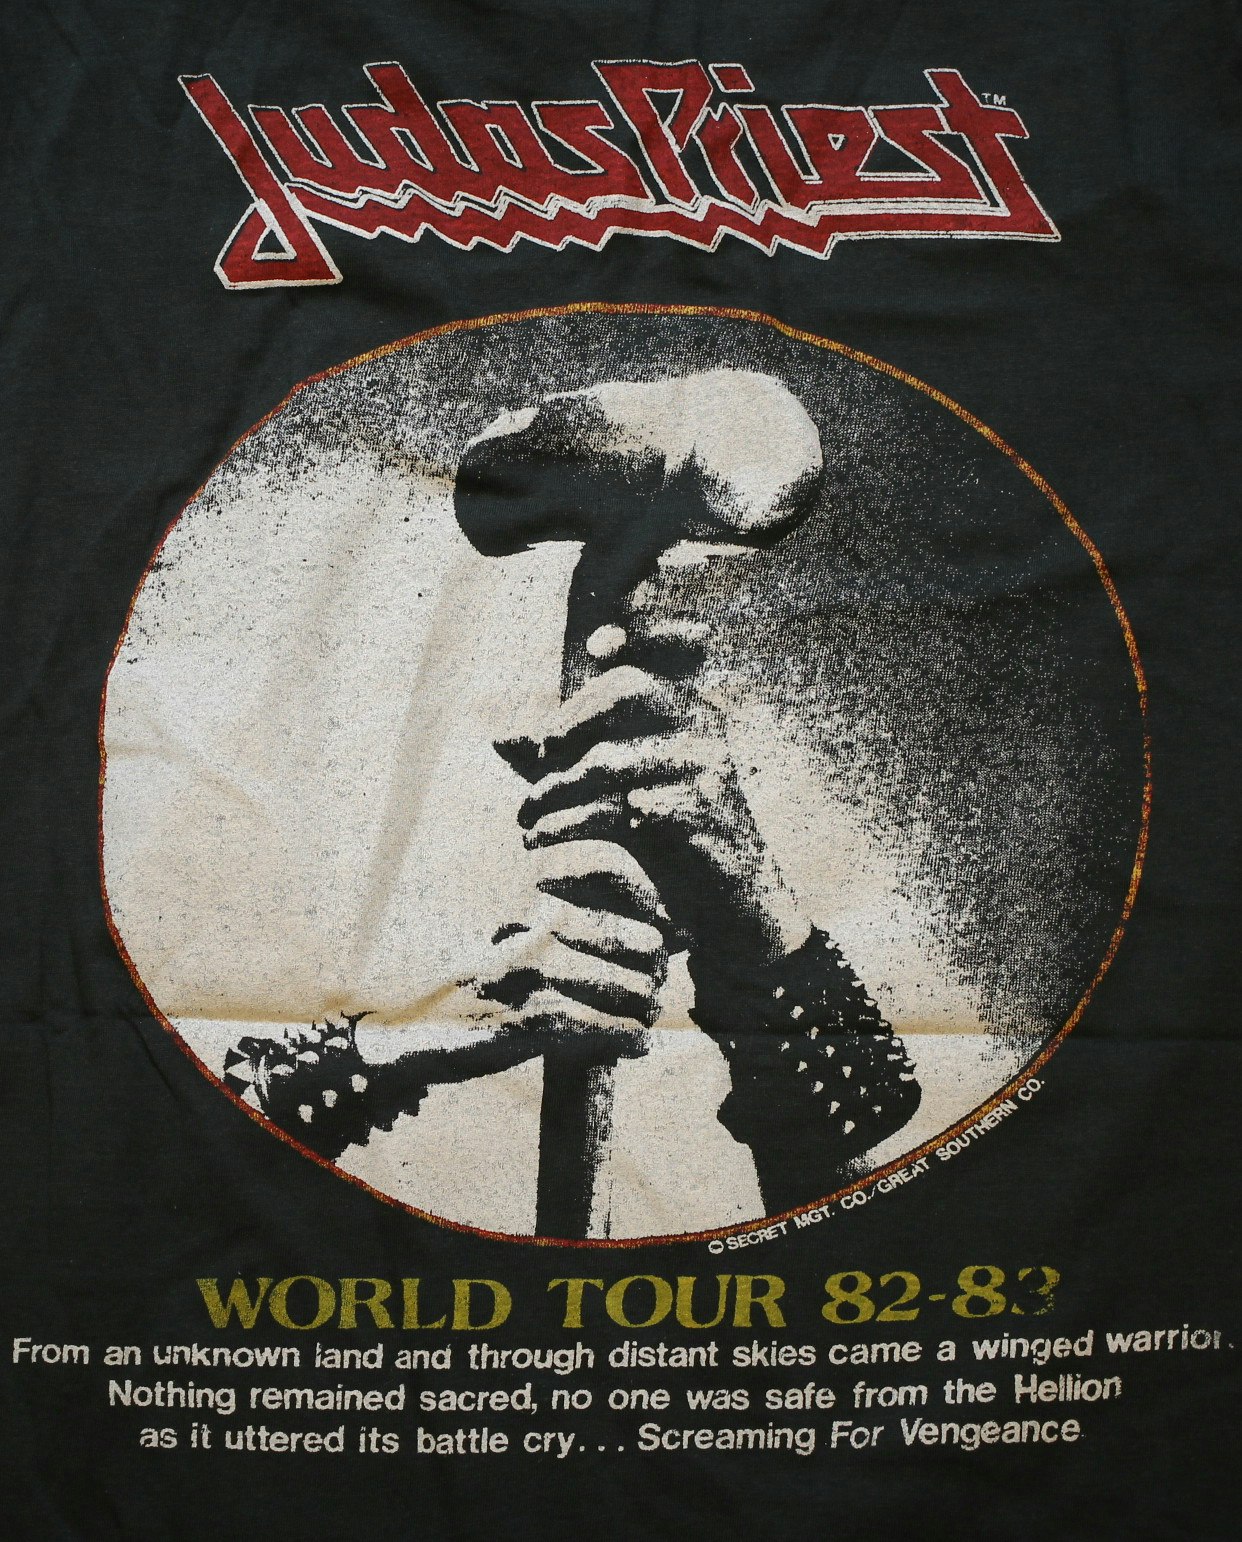 Judas priest Screaming for vengance Tour 82-83 T-shirt